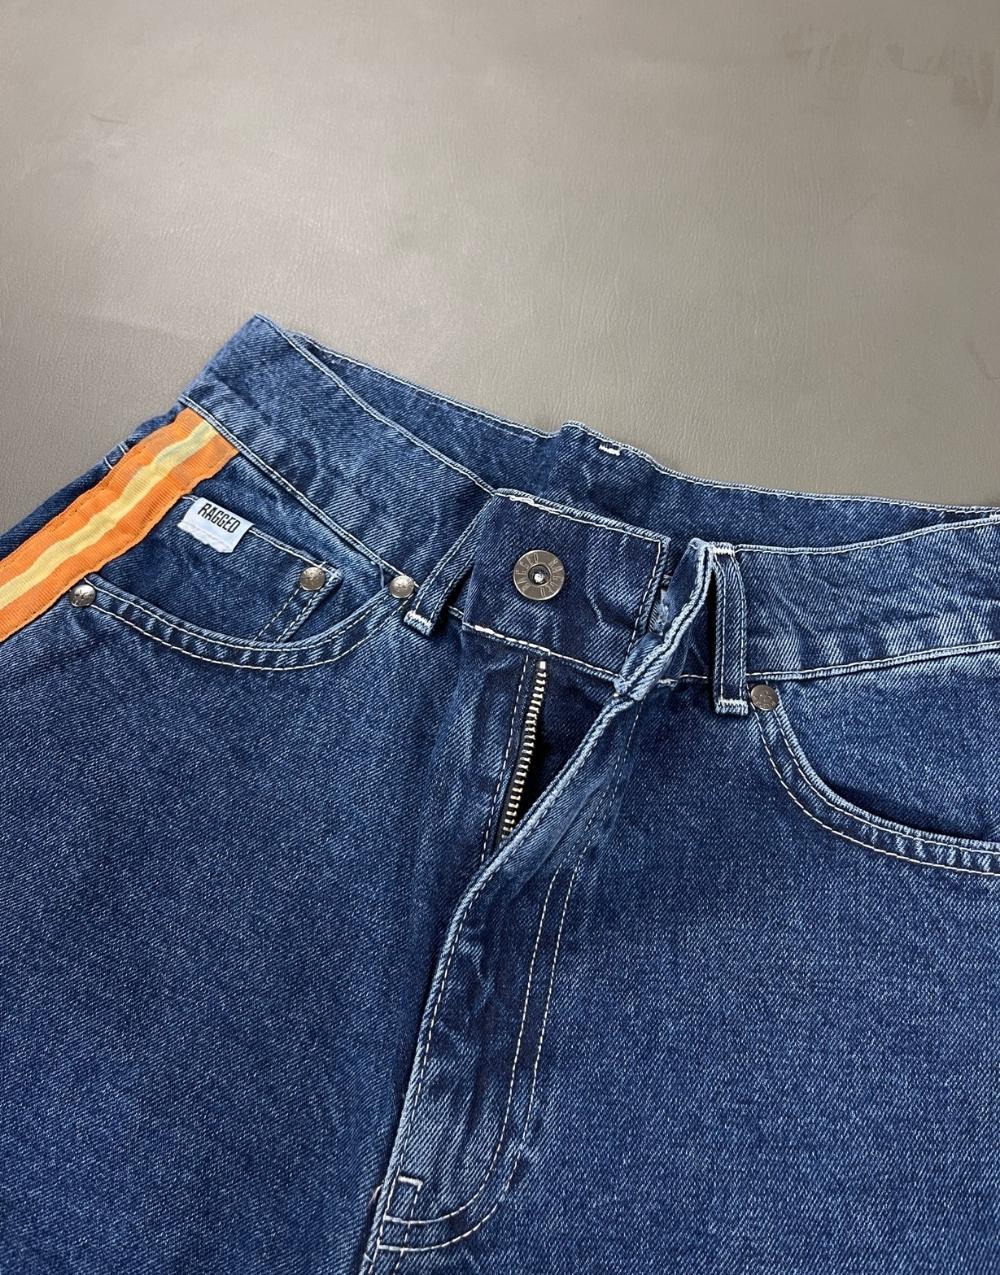 Men's Premium Striped Blue Jean Shorts - STREET MODE ™